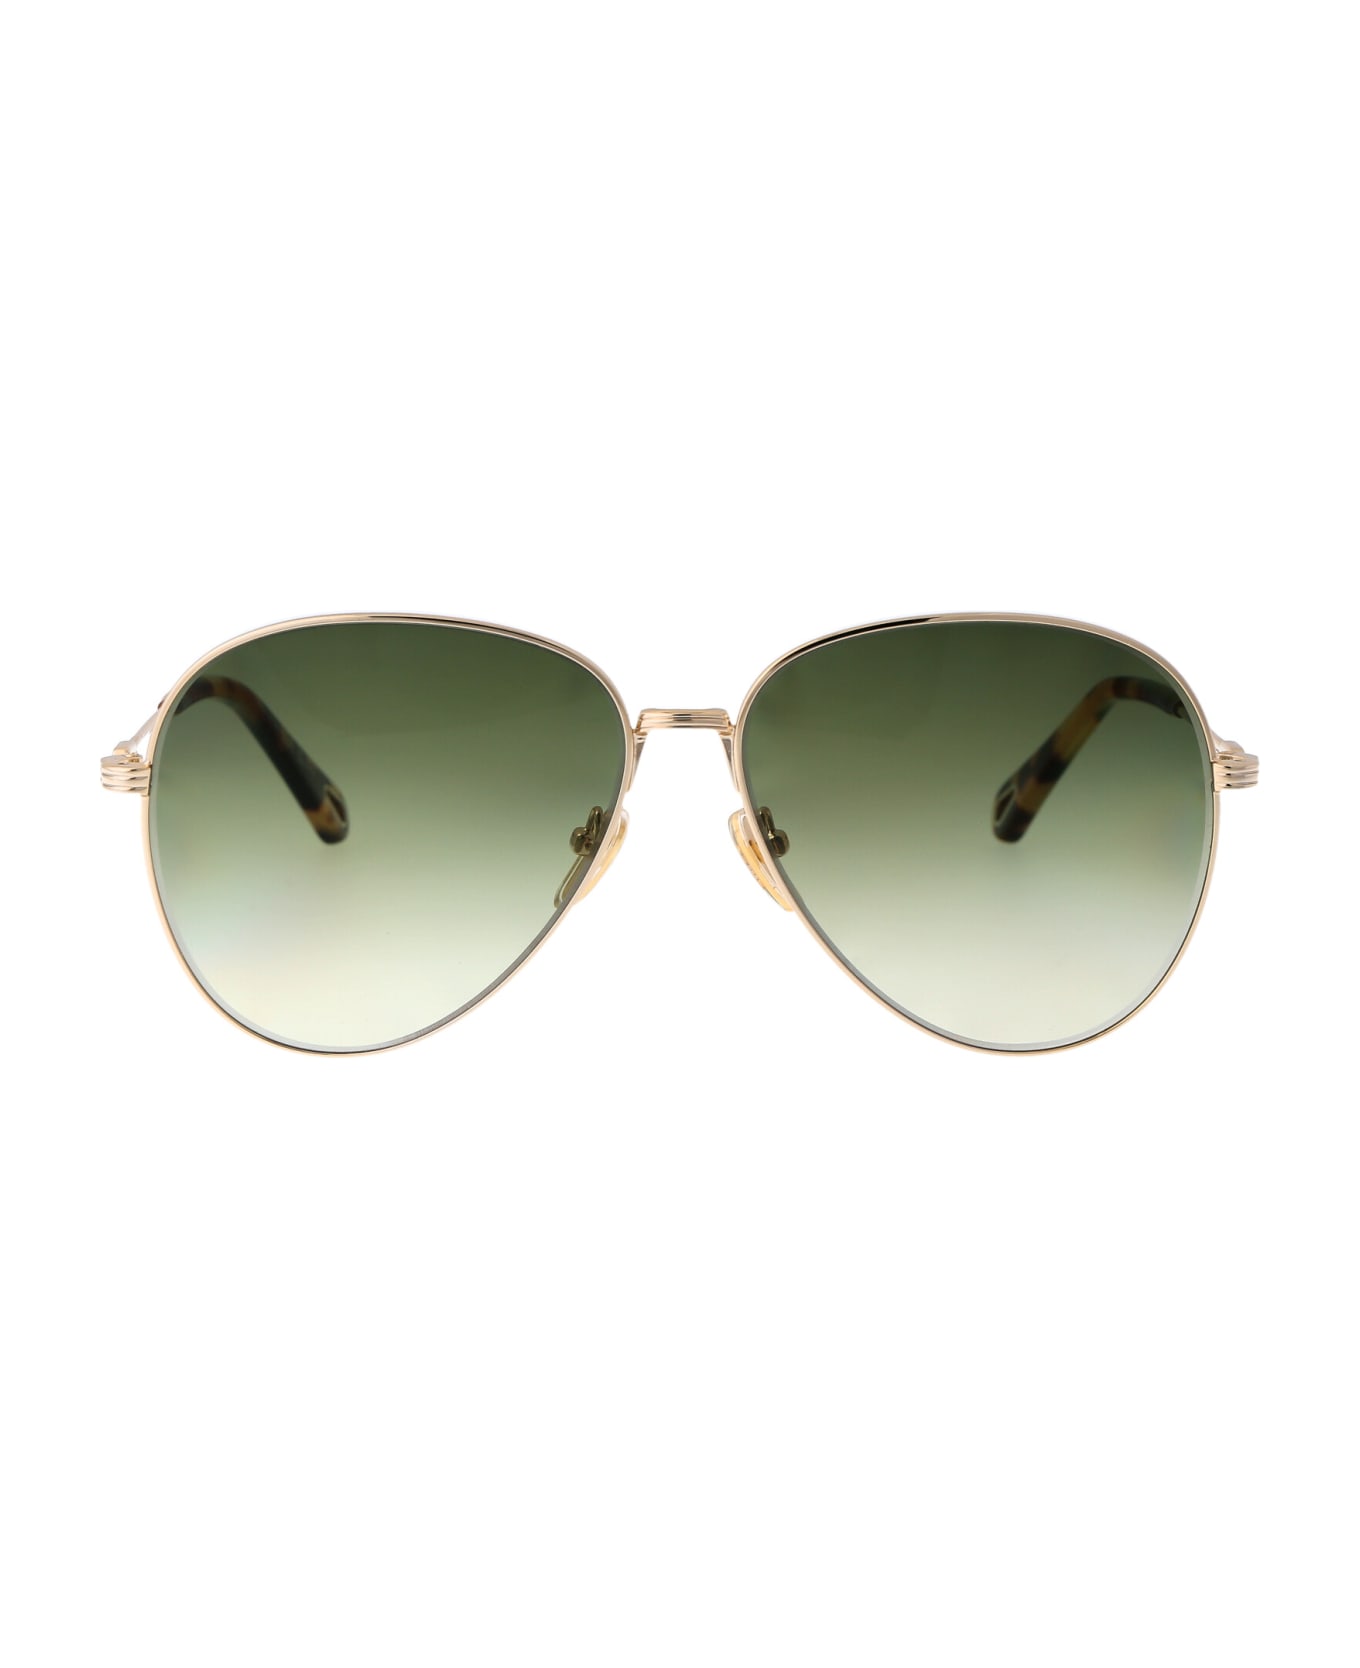 Chloé Eyewear Ch0177s Sunglasses - 004 GOLD GOLD GREEN